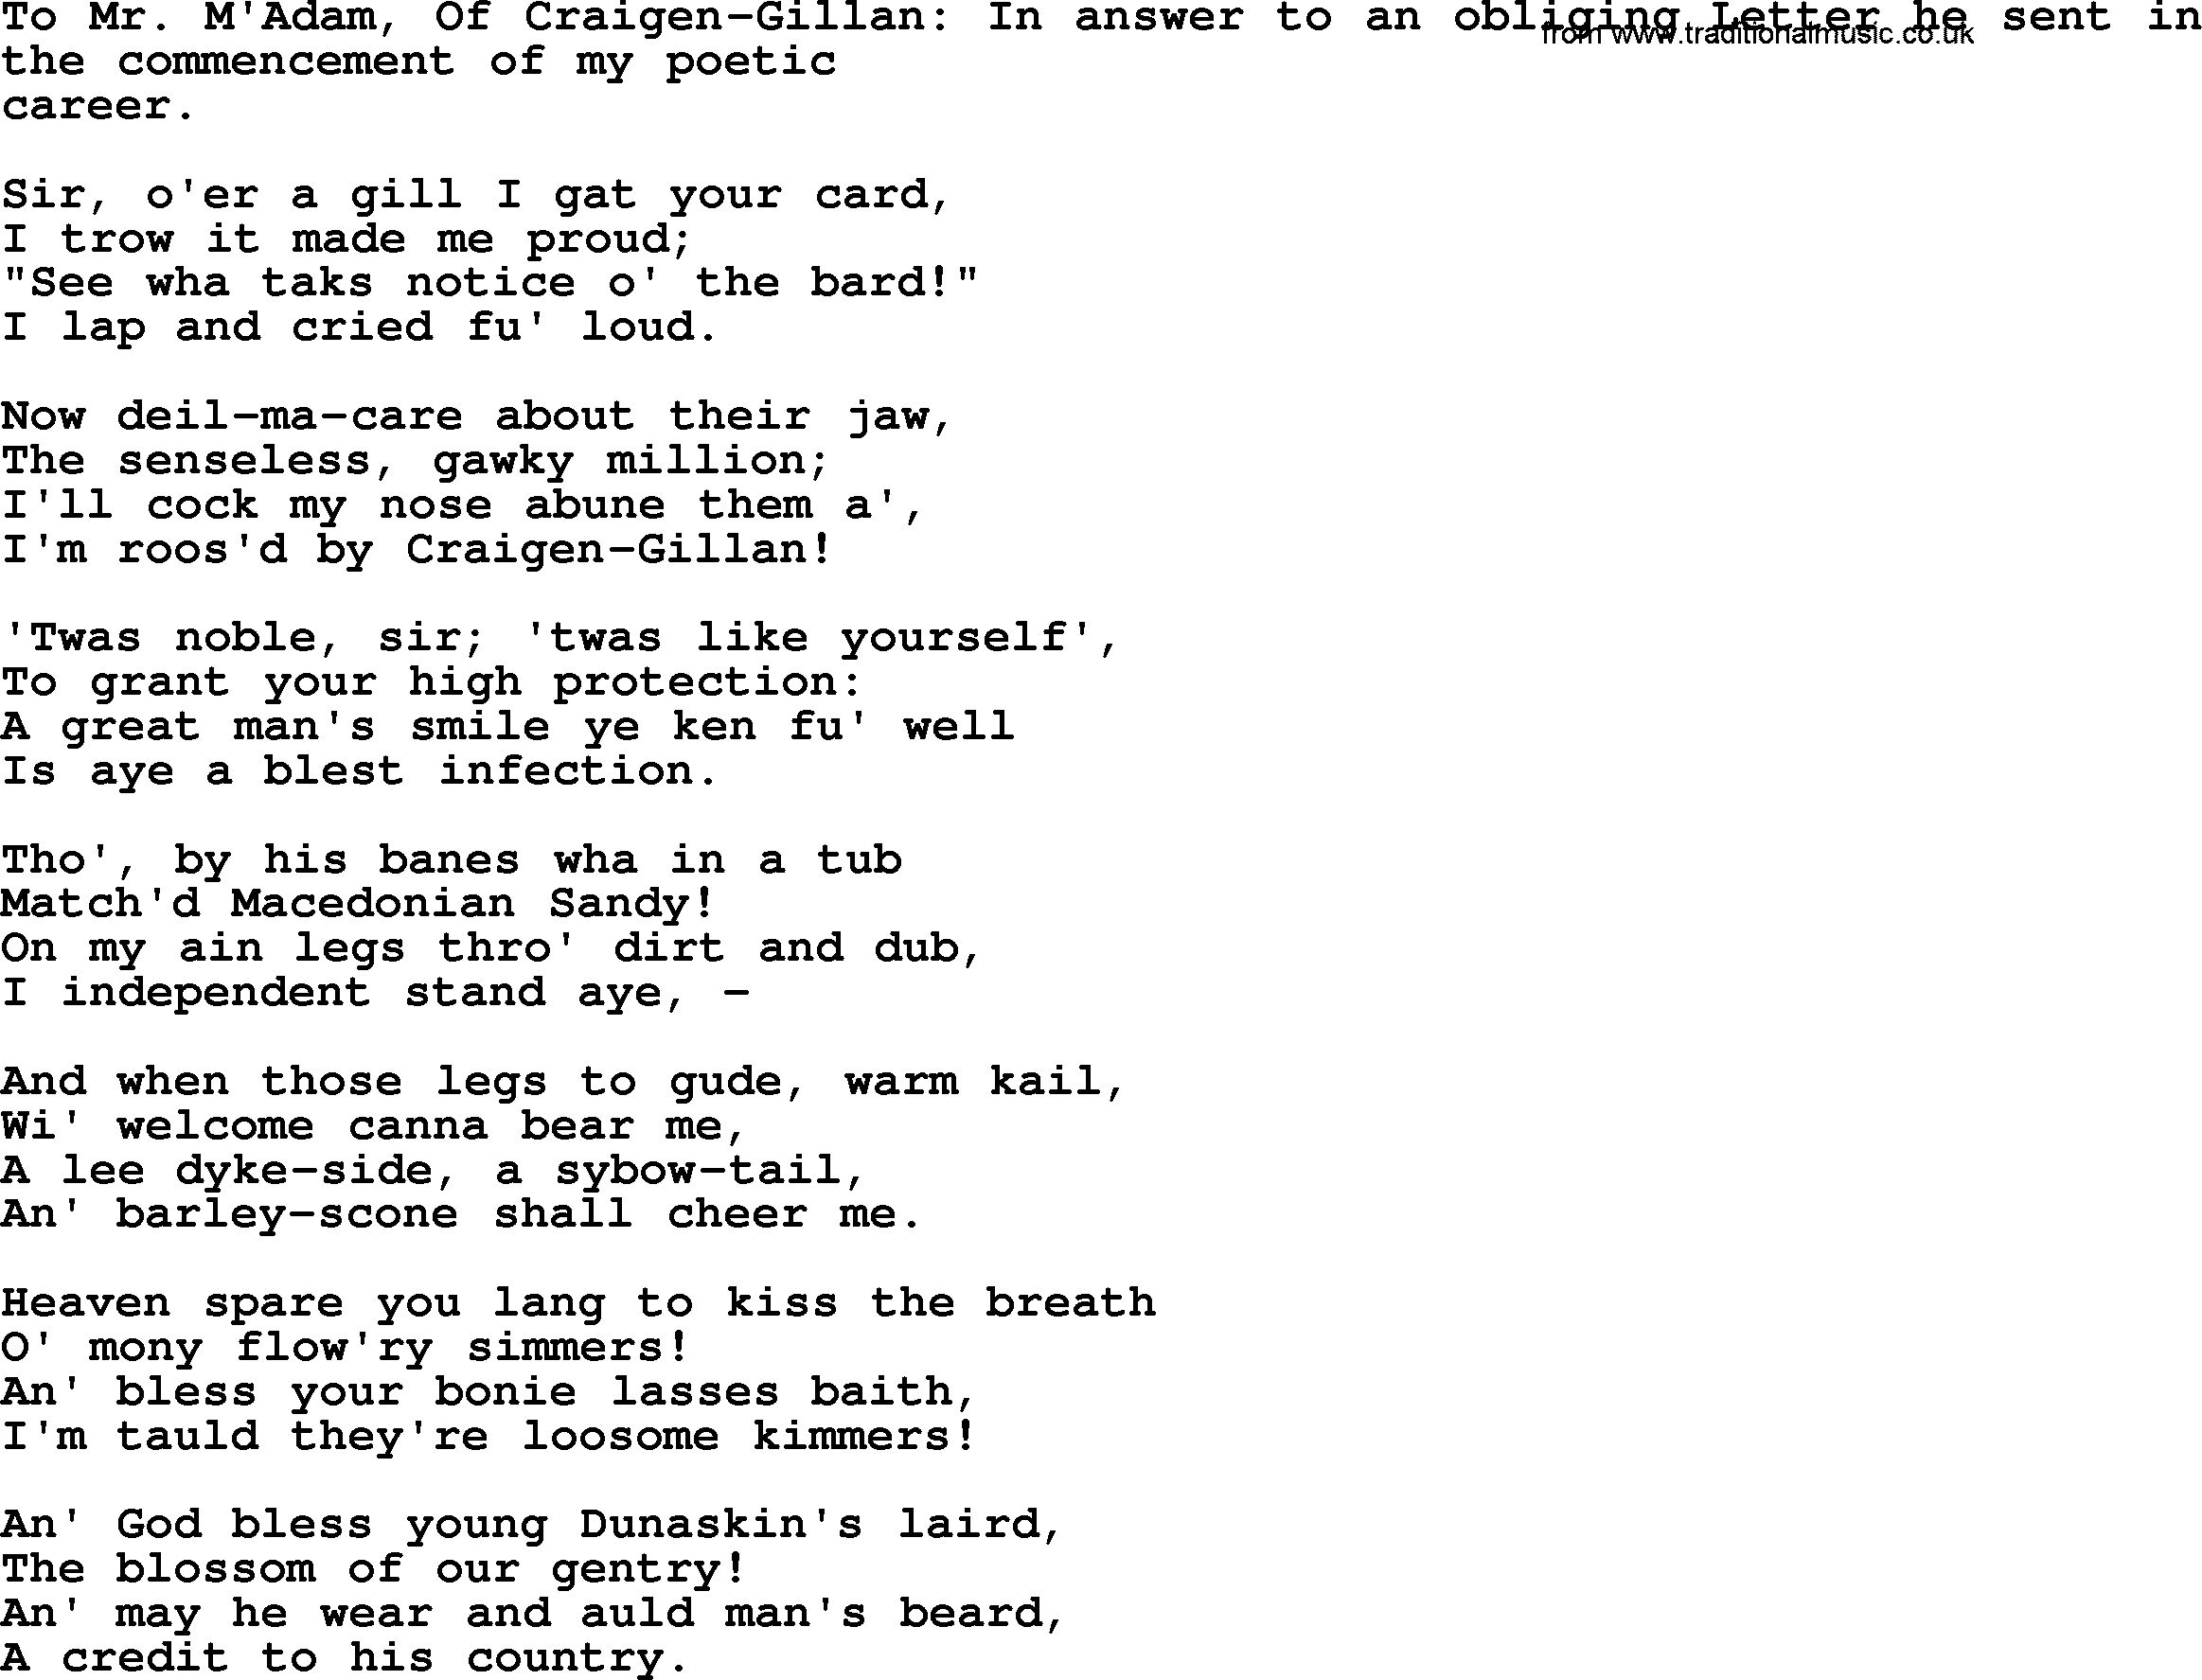 Robert Burns Songs & Lyrics: To Mr. M'adam, Of Craigen-gillan